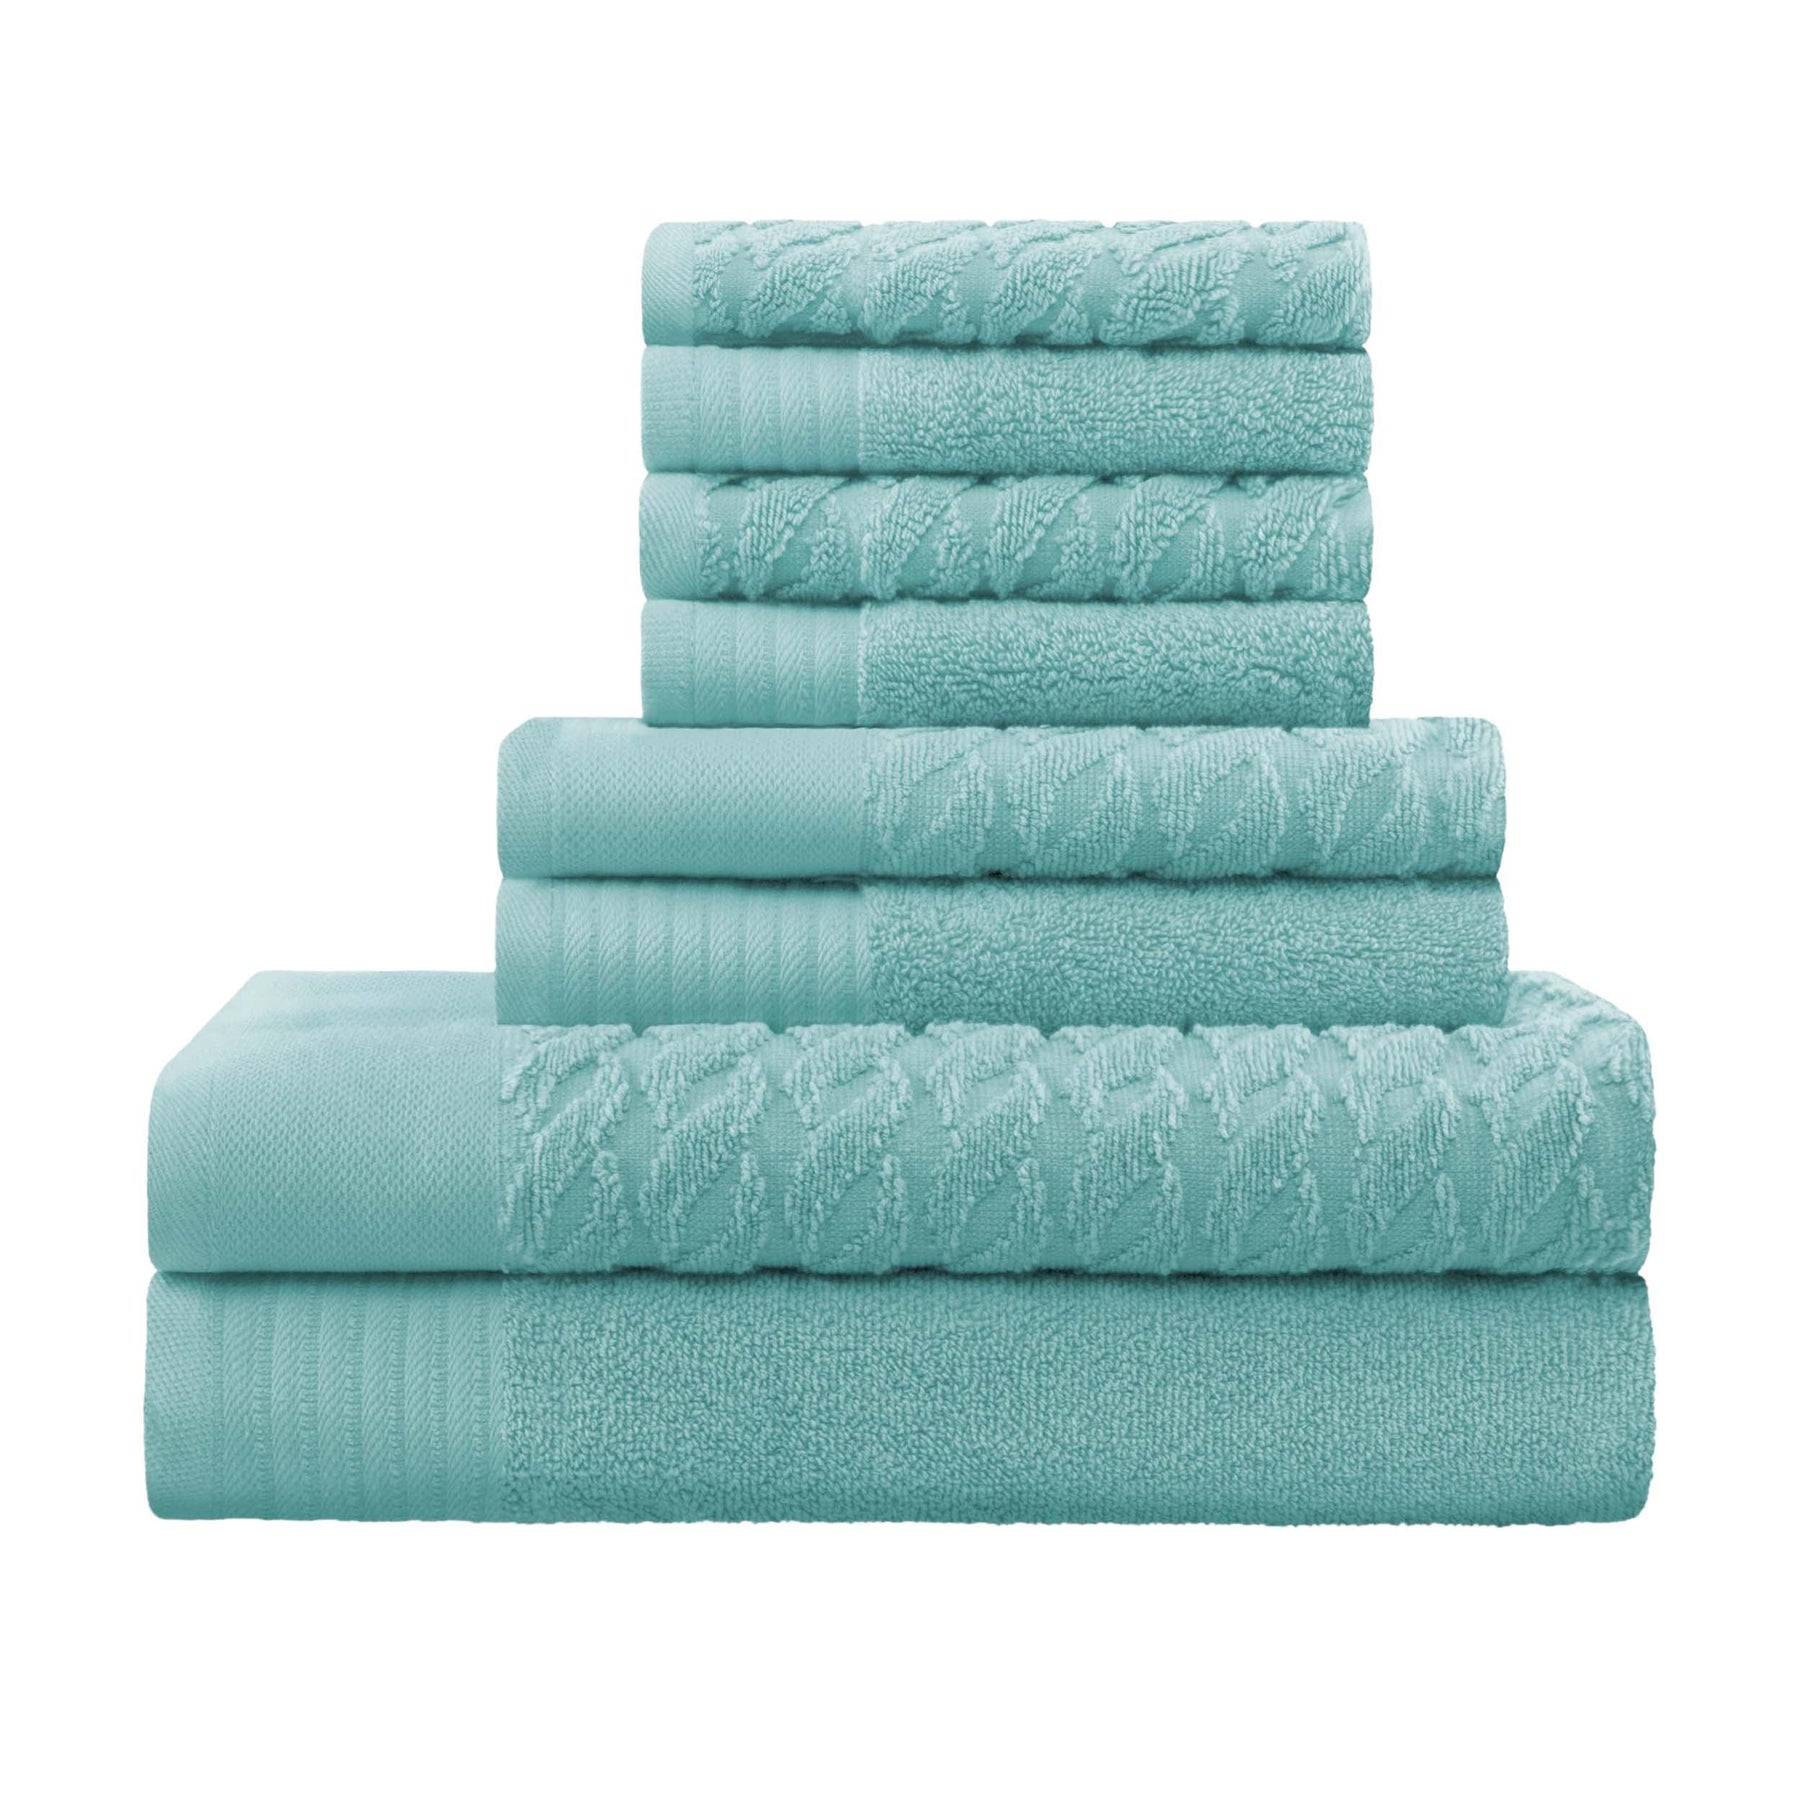 Premium Turkish Cotton Jacquard Herringbone and Solid 8-Piece Towel Set - Cascade